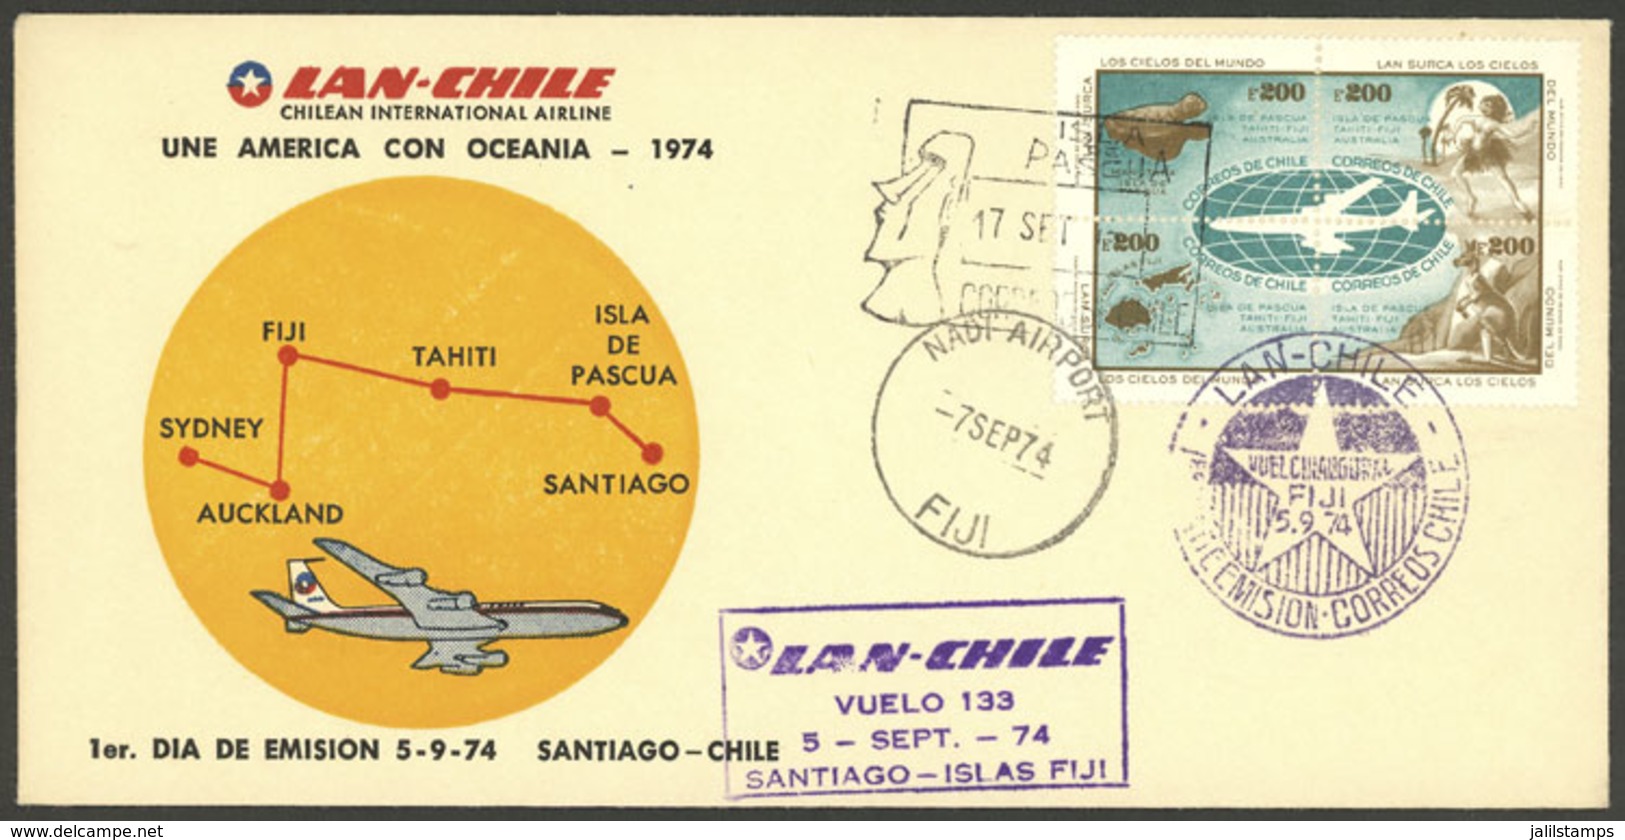 CHILE: 7/SE/1974 FIJI - PASCUA - SANTIAGO, First Flight (return) Of Lan-Chile, VF Quality! - Chile